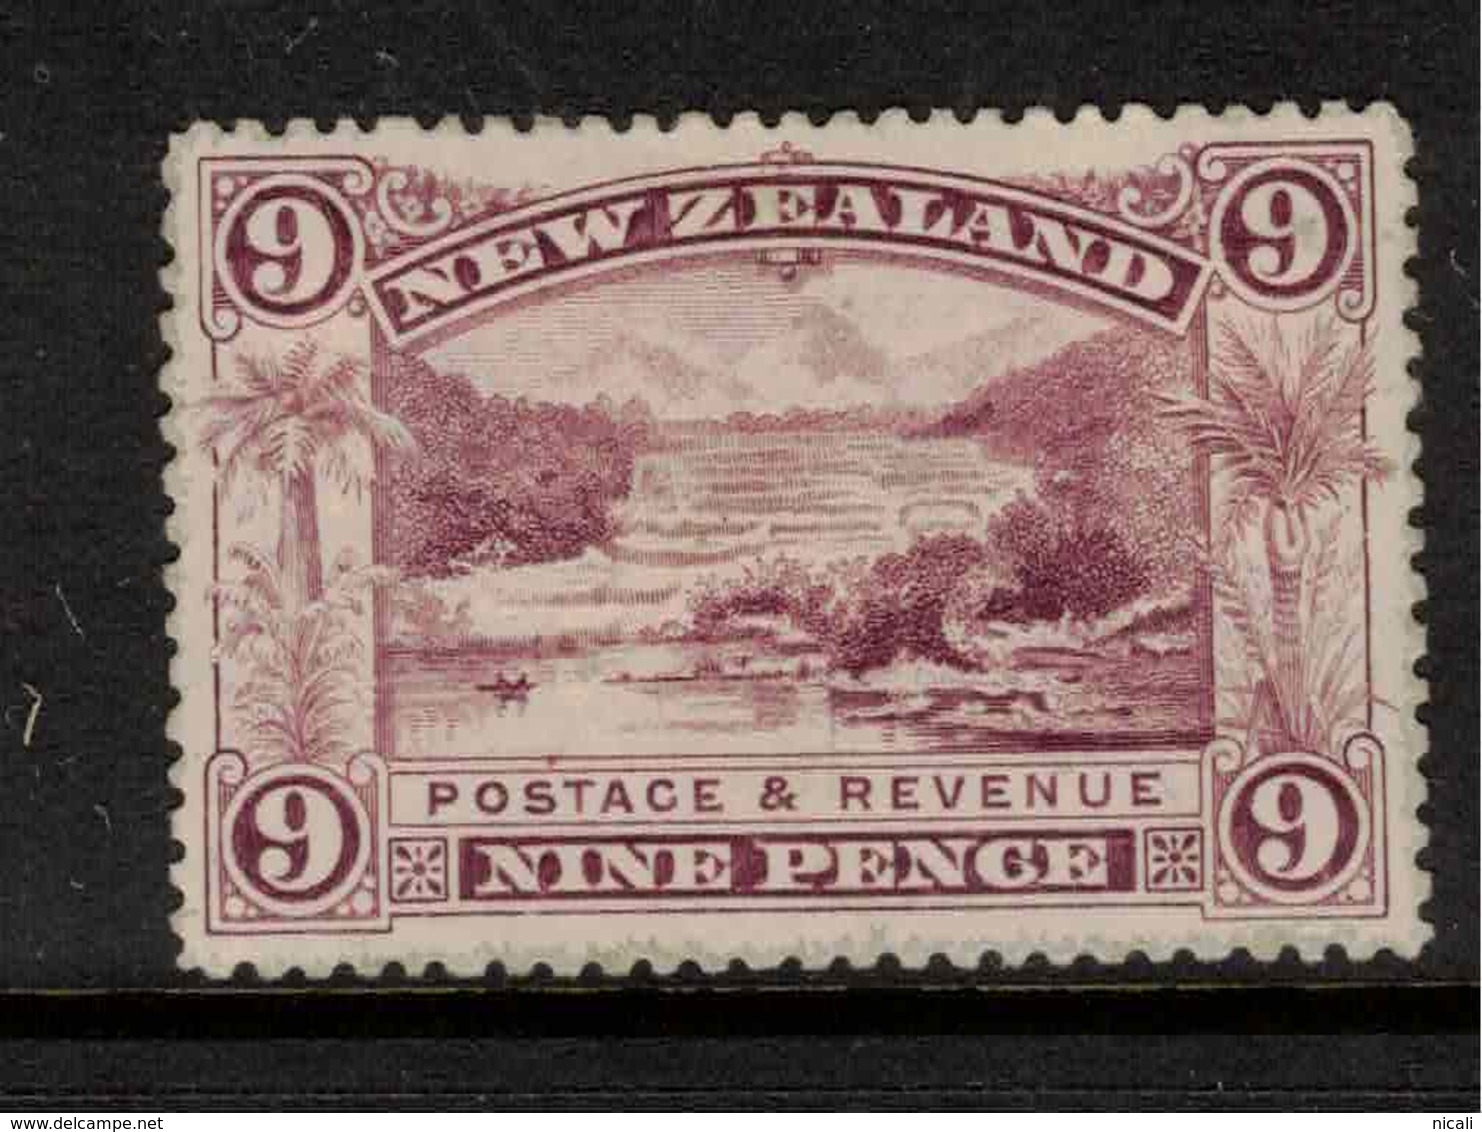 NZ 1898 9d Pink Terraces SG 256 HM ZZ109 - Ungebraucht